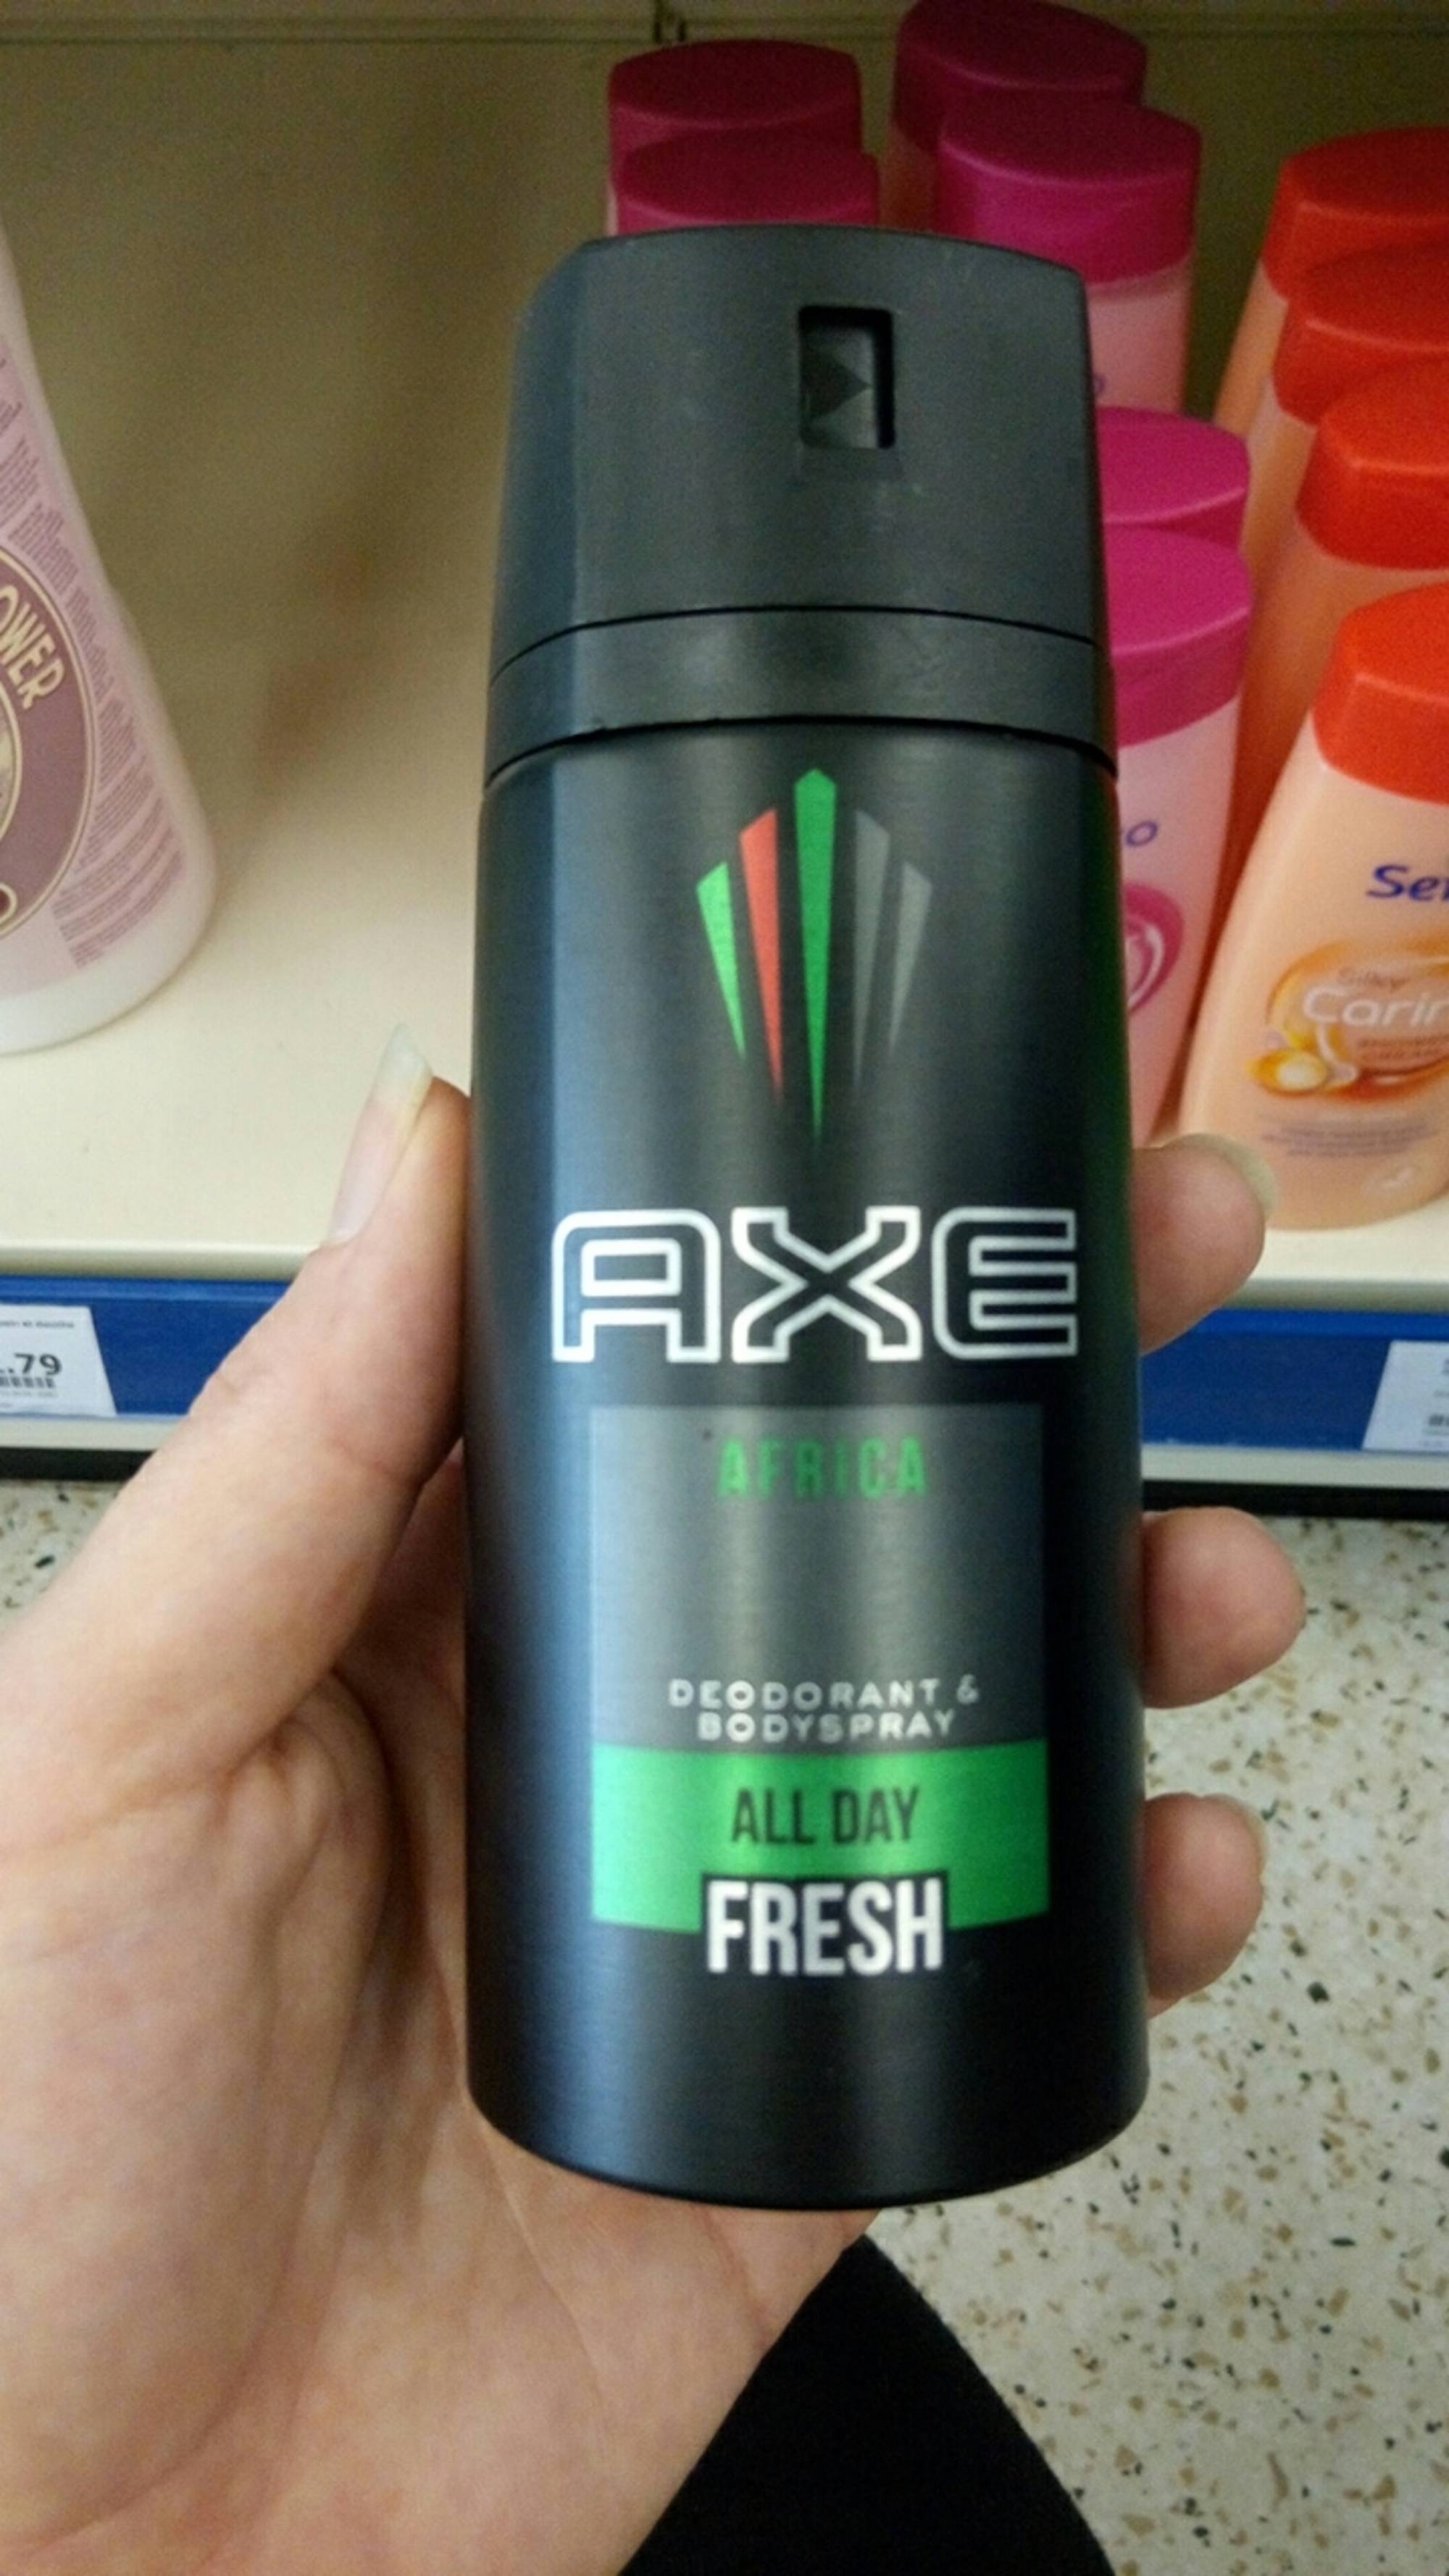 AXE - Africa - Deodorant & bodyspray